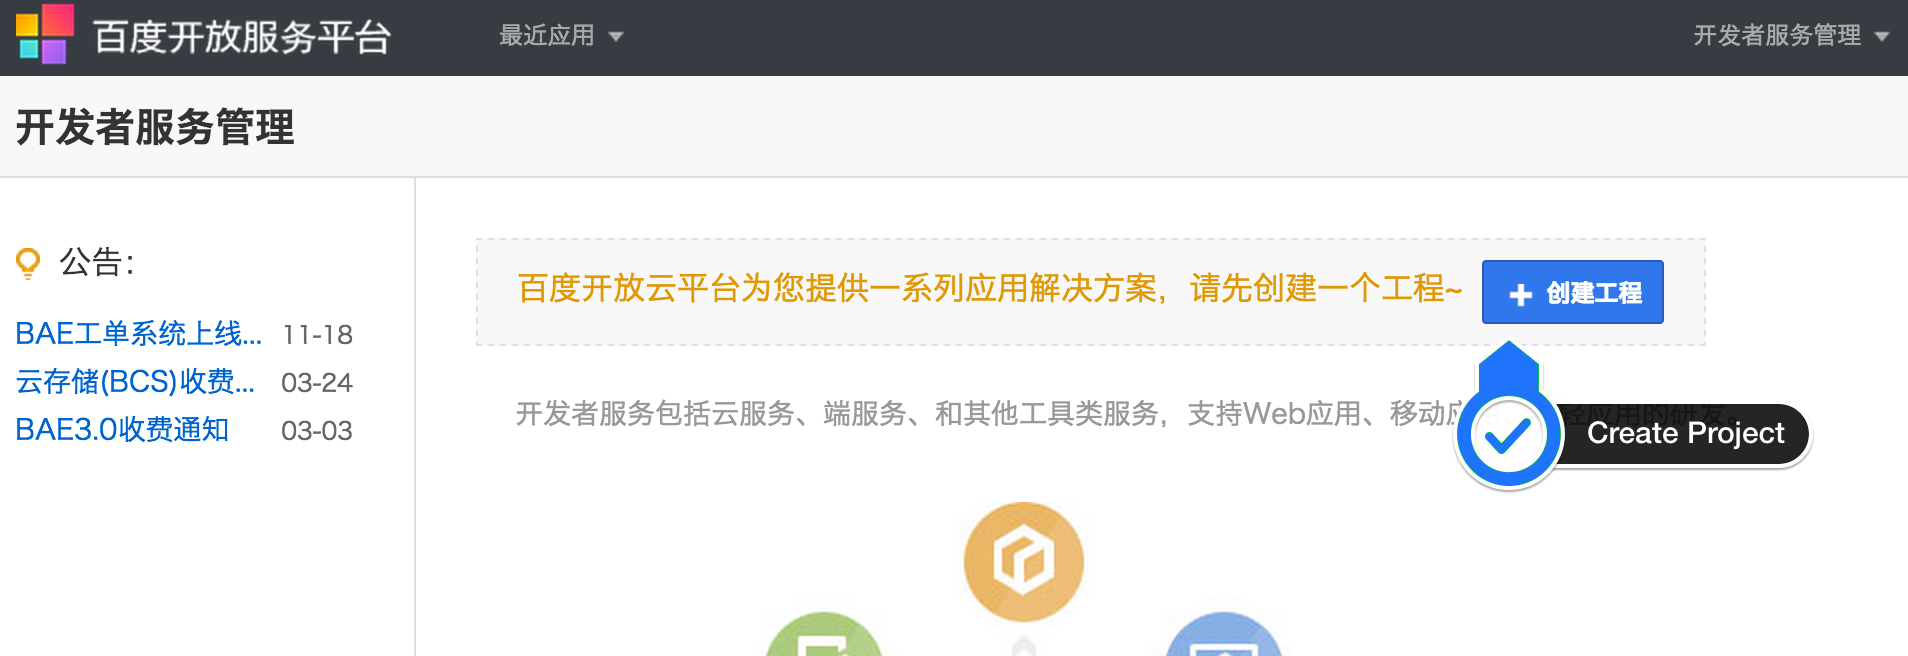 Baidu Project Portal